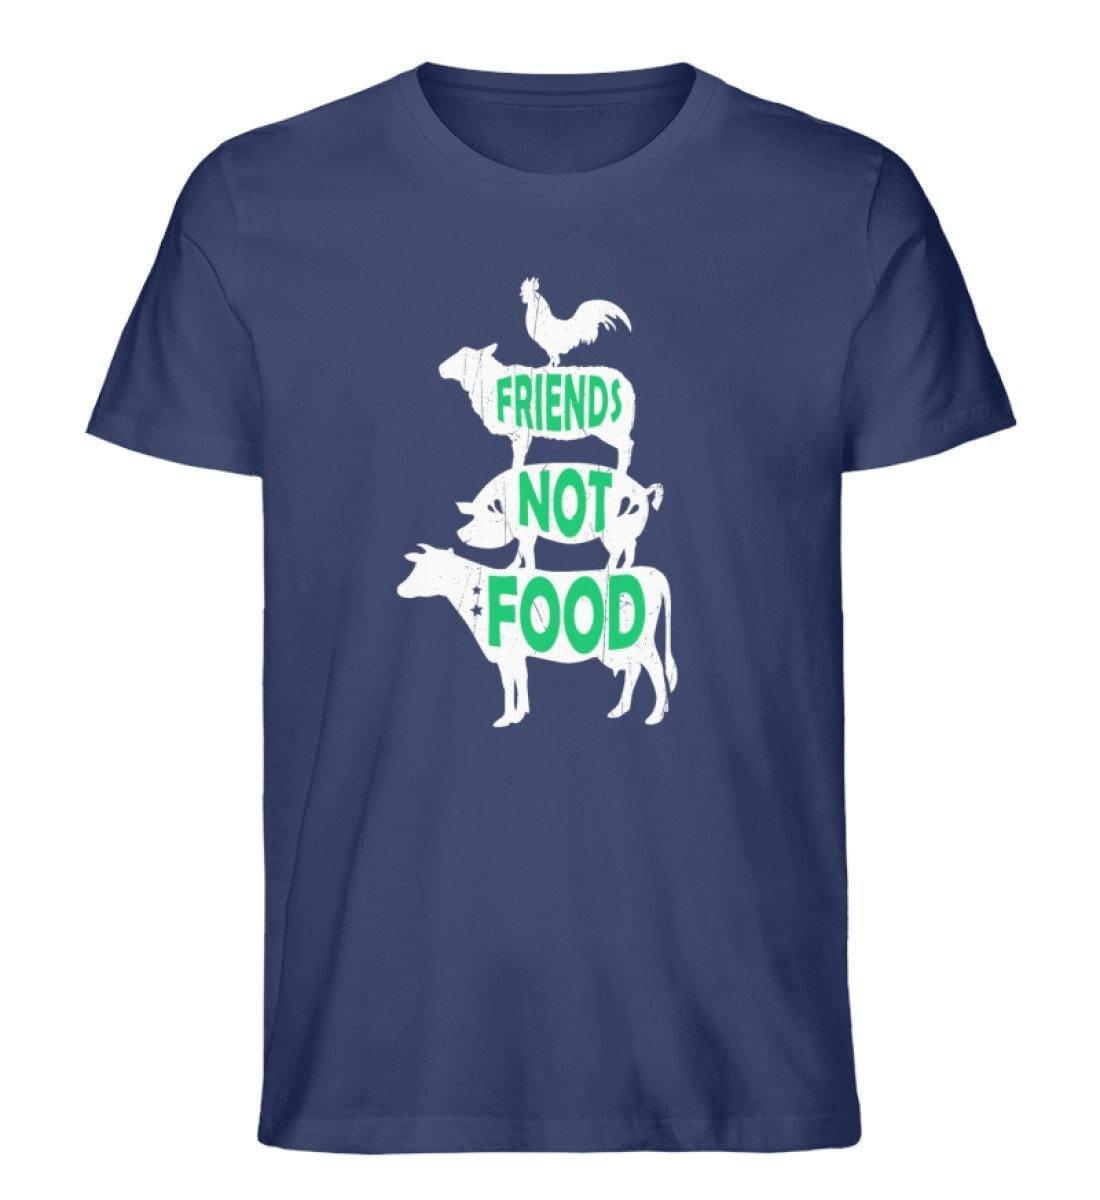 Friends not food - Unisex Organic Shirt - Team Vegan © vegan t shirt